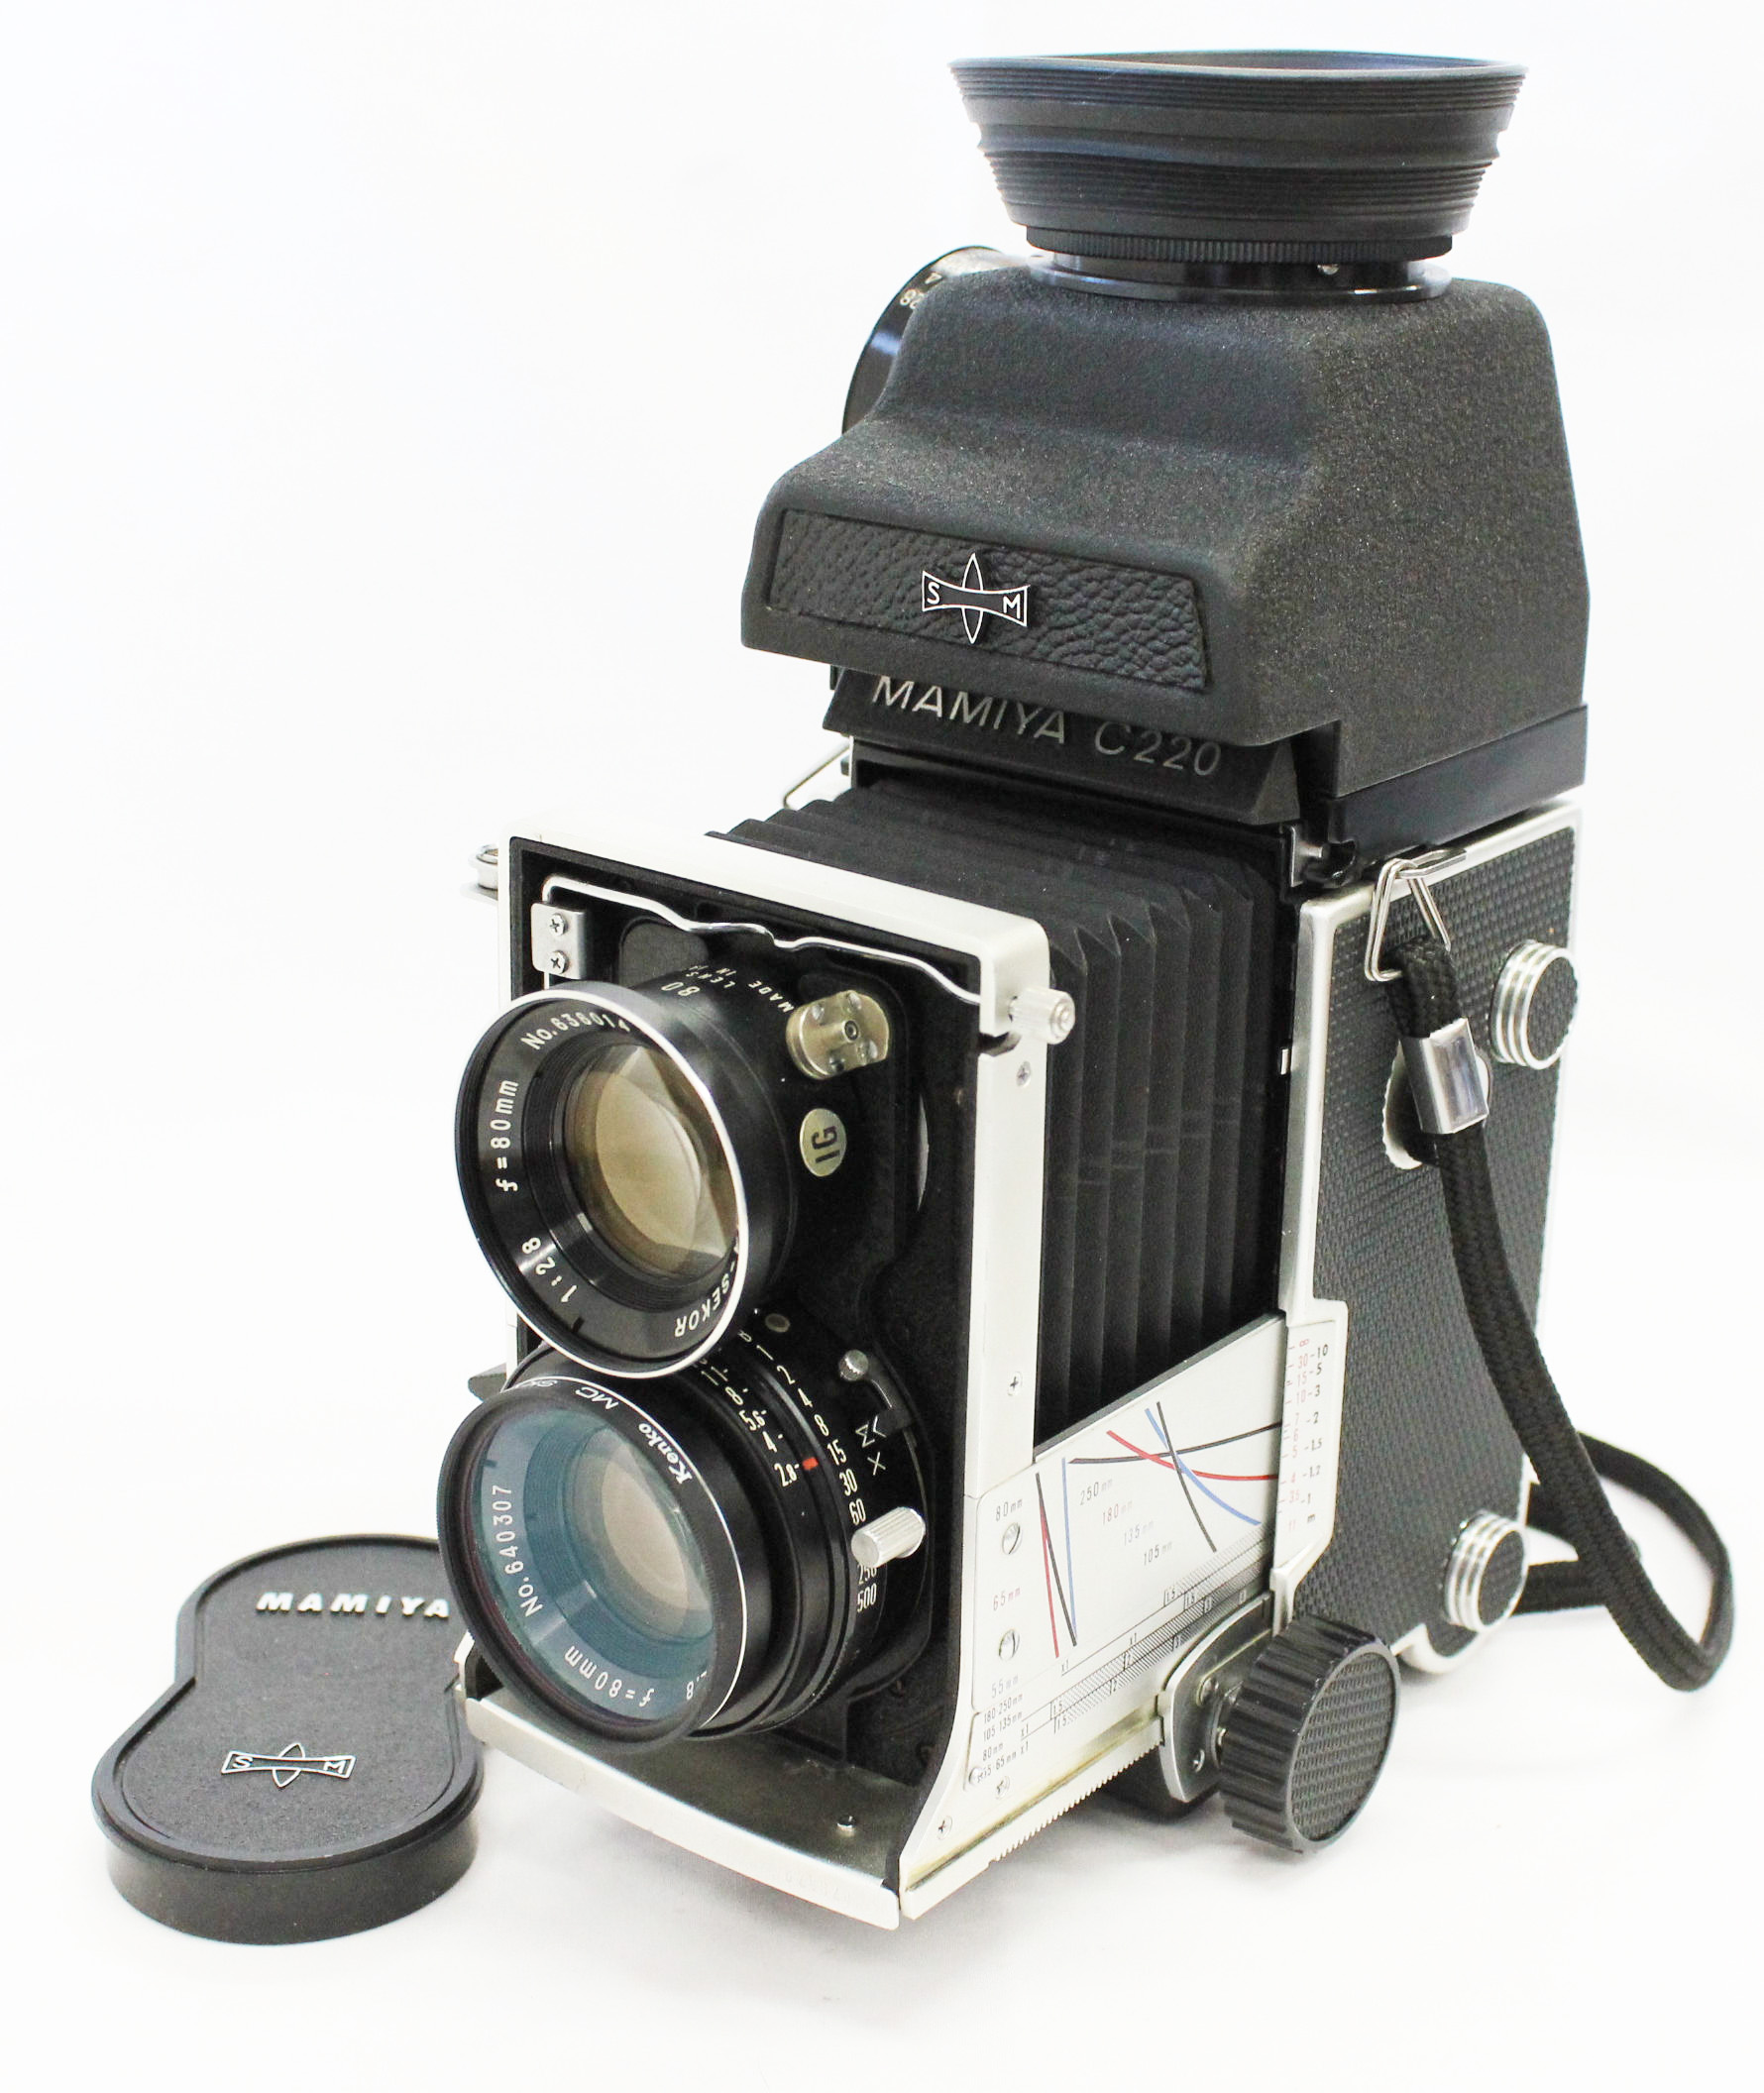  Mamiya C220 Pro TLR Medium Format Camera with 80mm F2.8 and CdS Magnifying Hood from Japan Photo 0